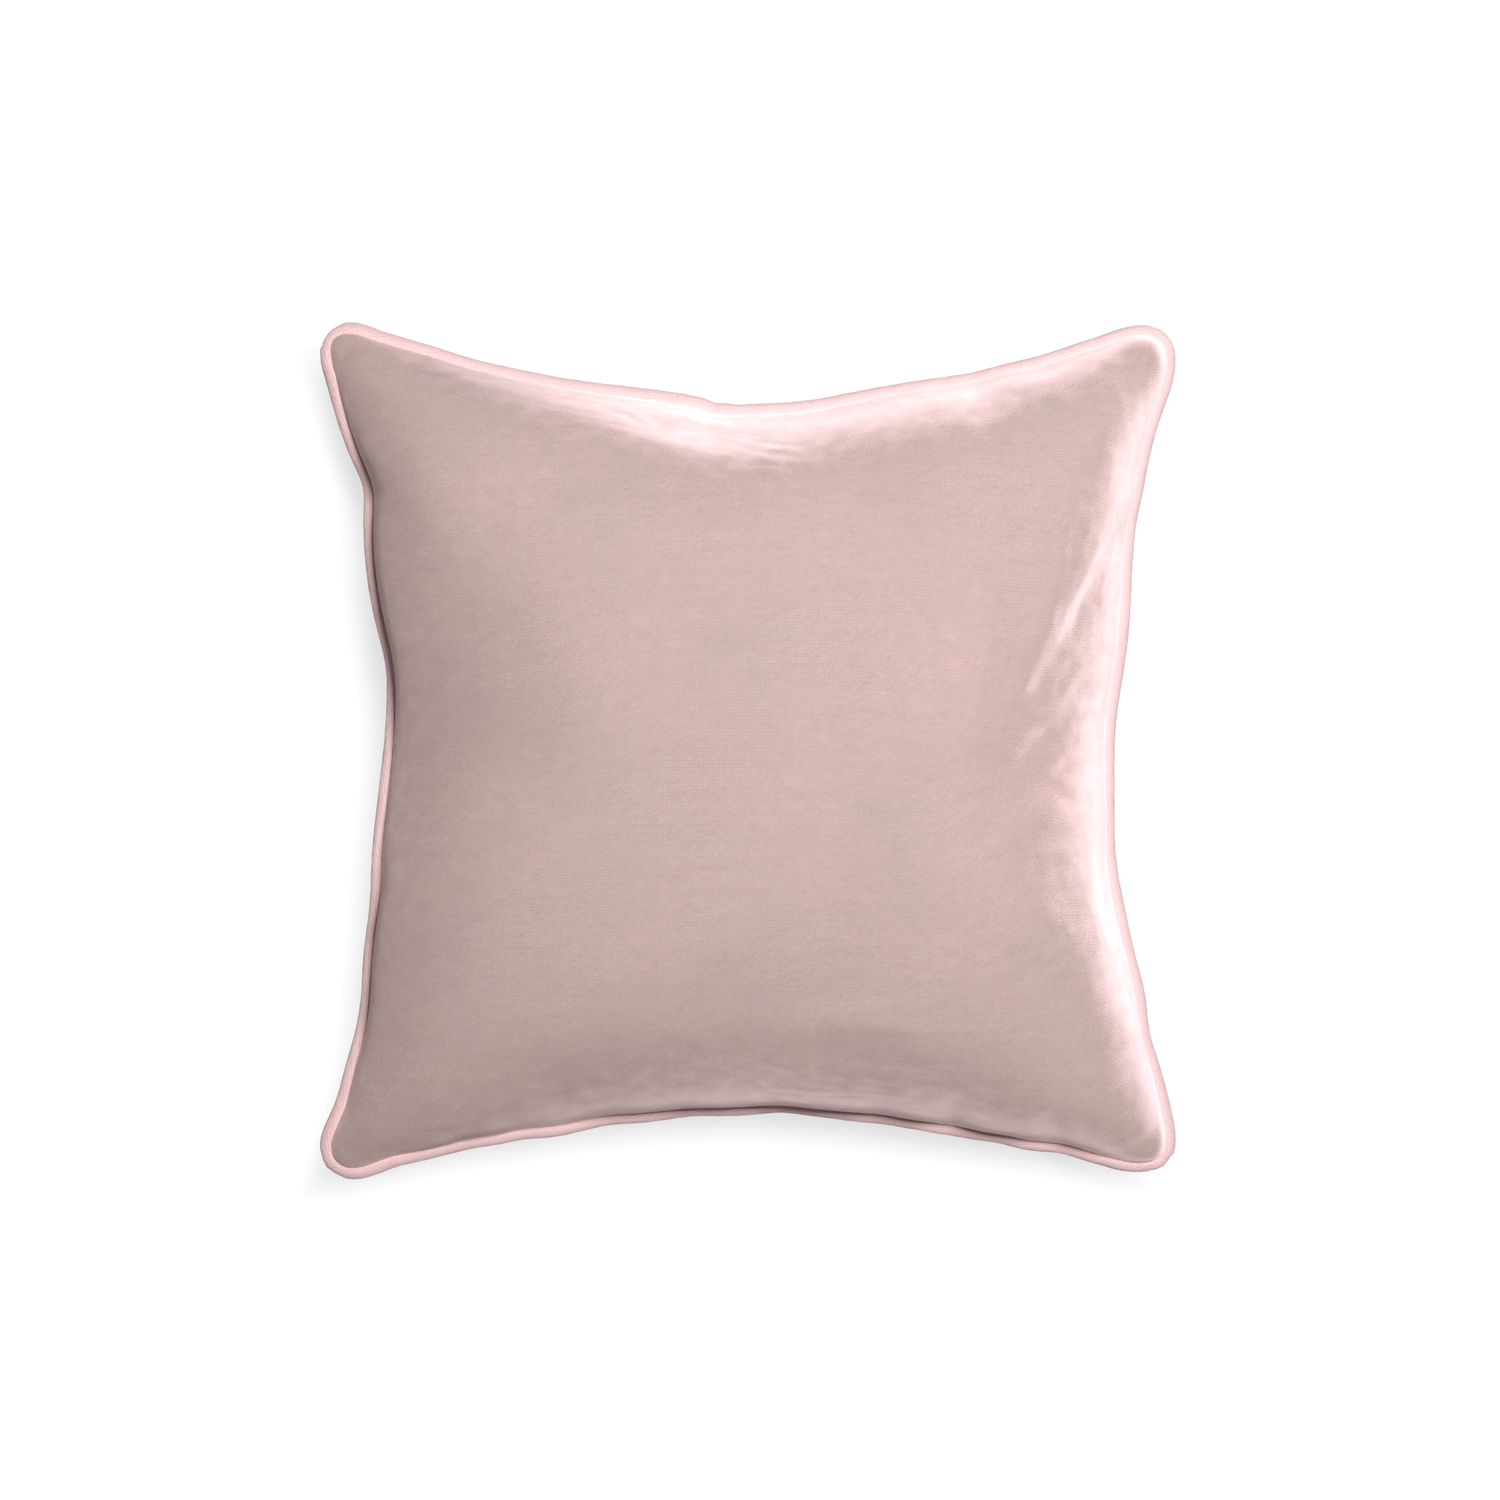 18-square rose velvet custom pillow with petal piping on white background